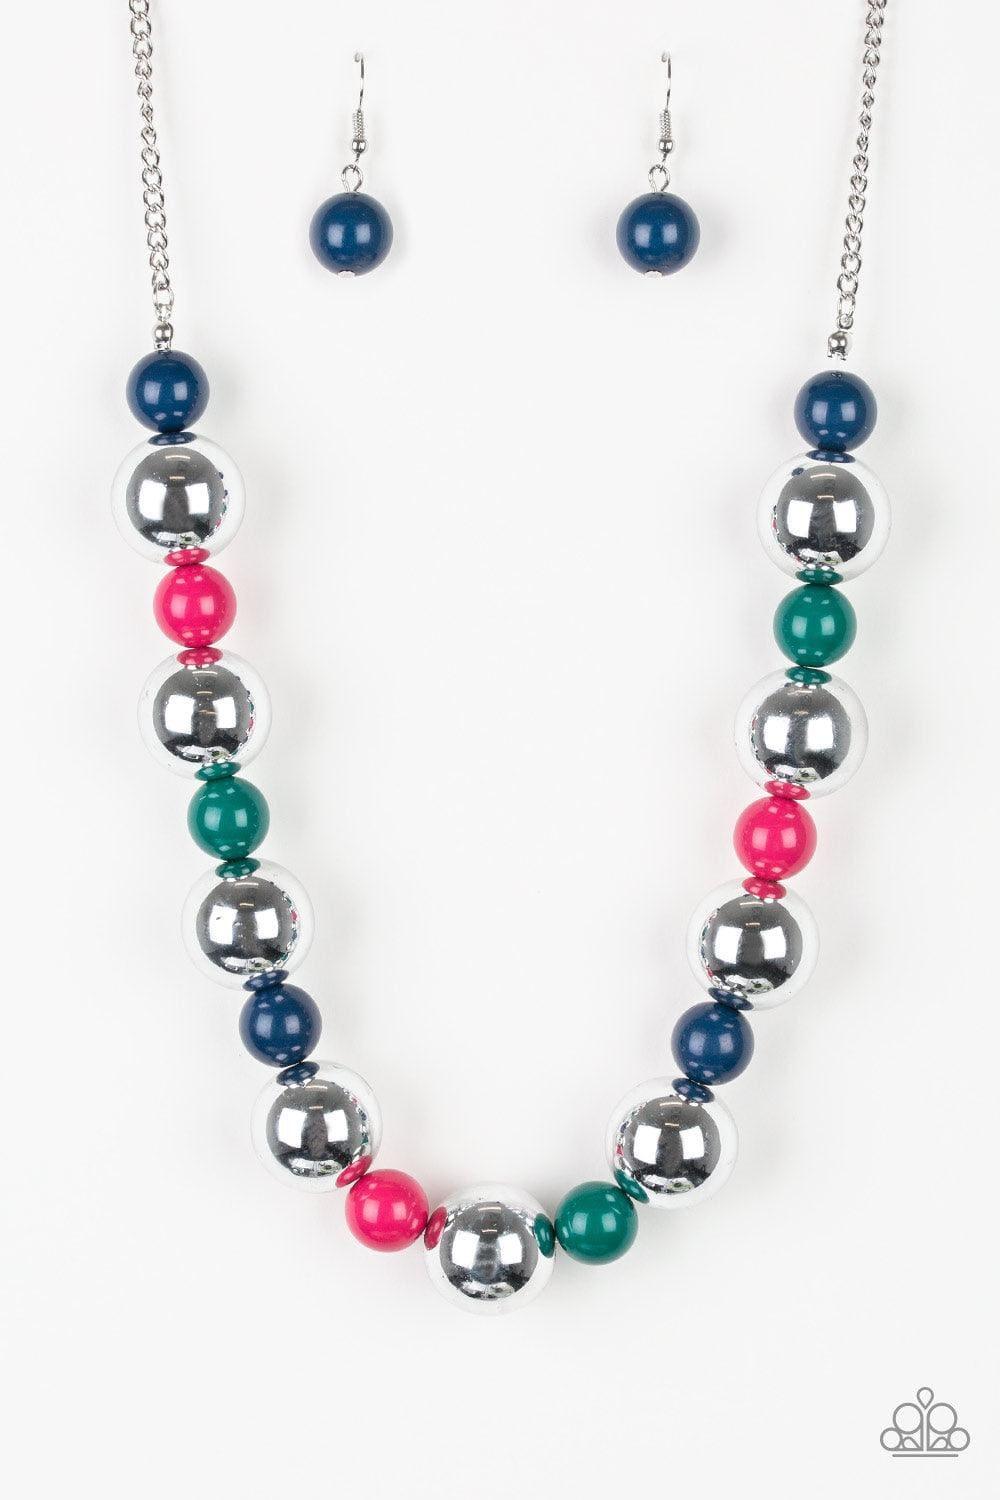 Paparazzi Accessories - Top Pop - Multicolor Necklace - Bling by JessieK